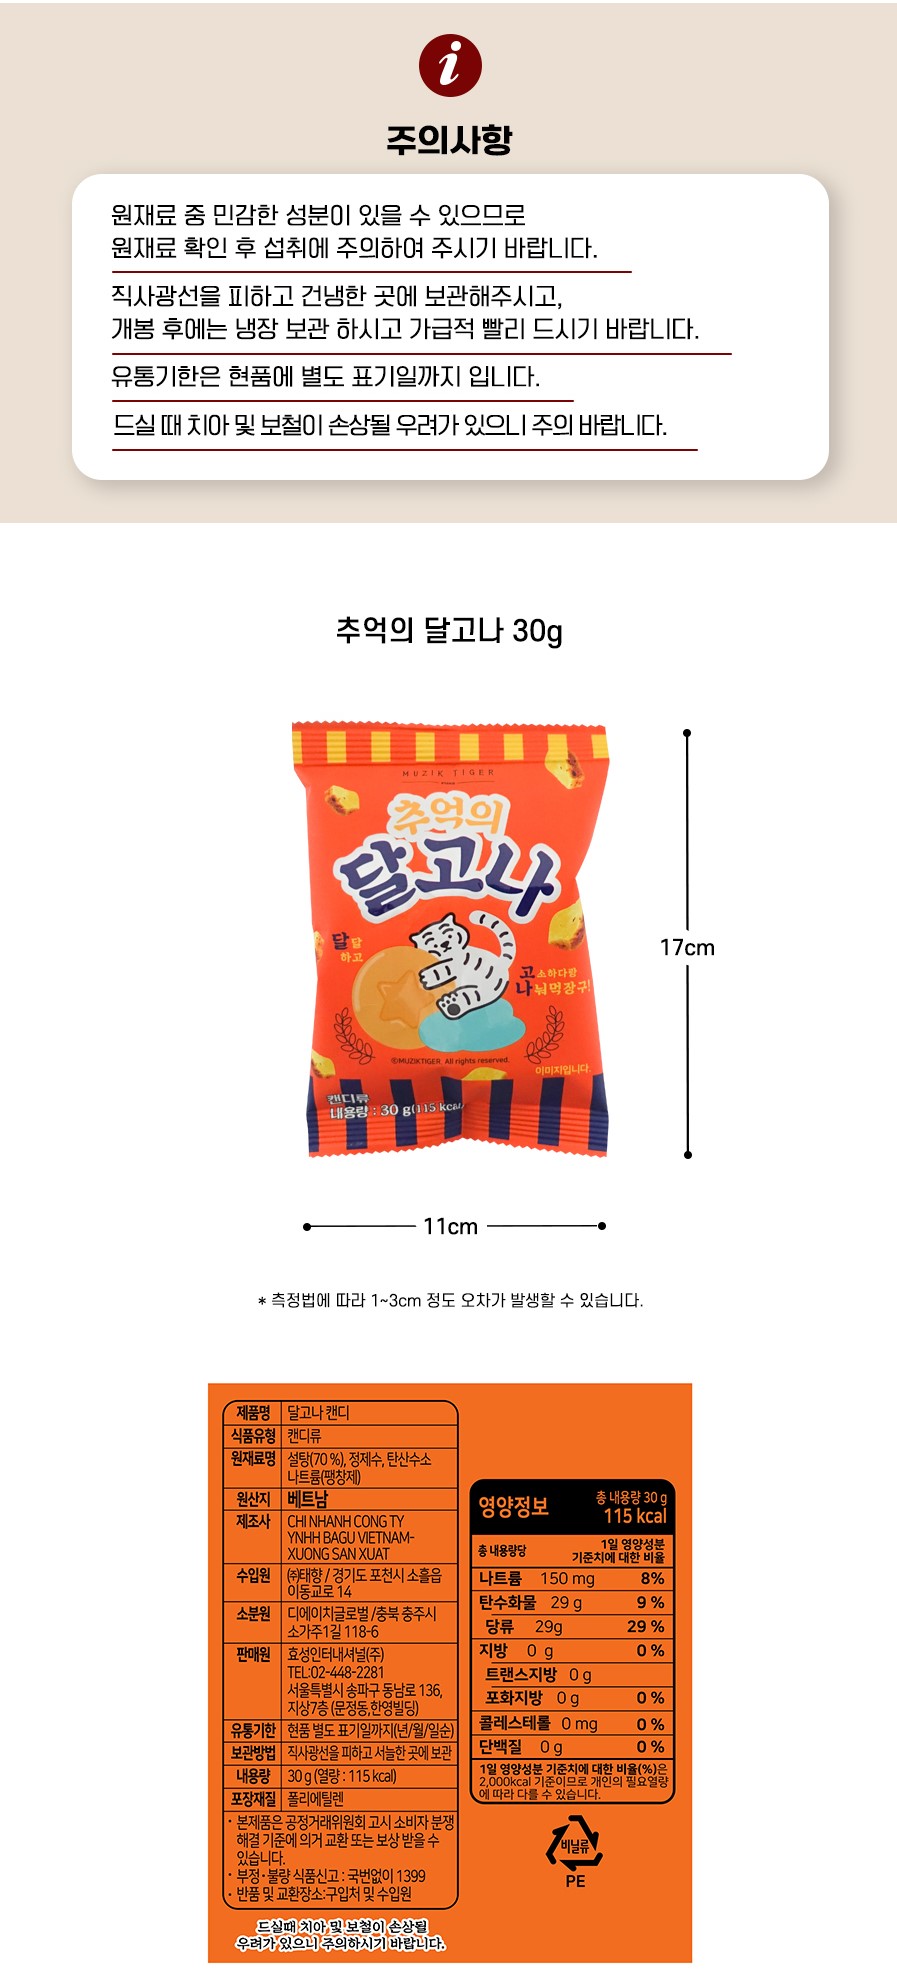 韓國食品-[Muziktiger] Roasted Sugar 30g